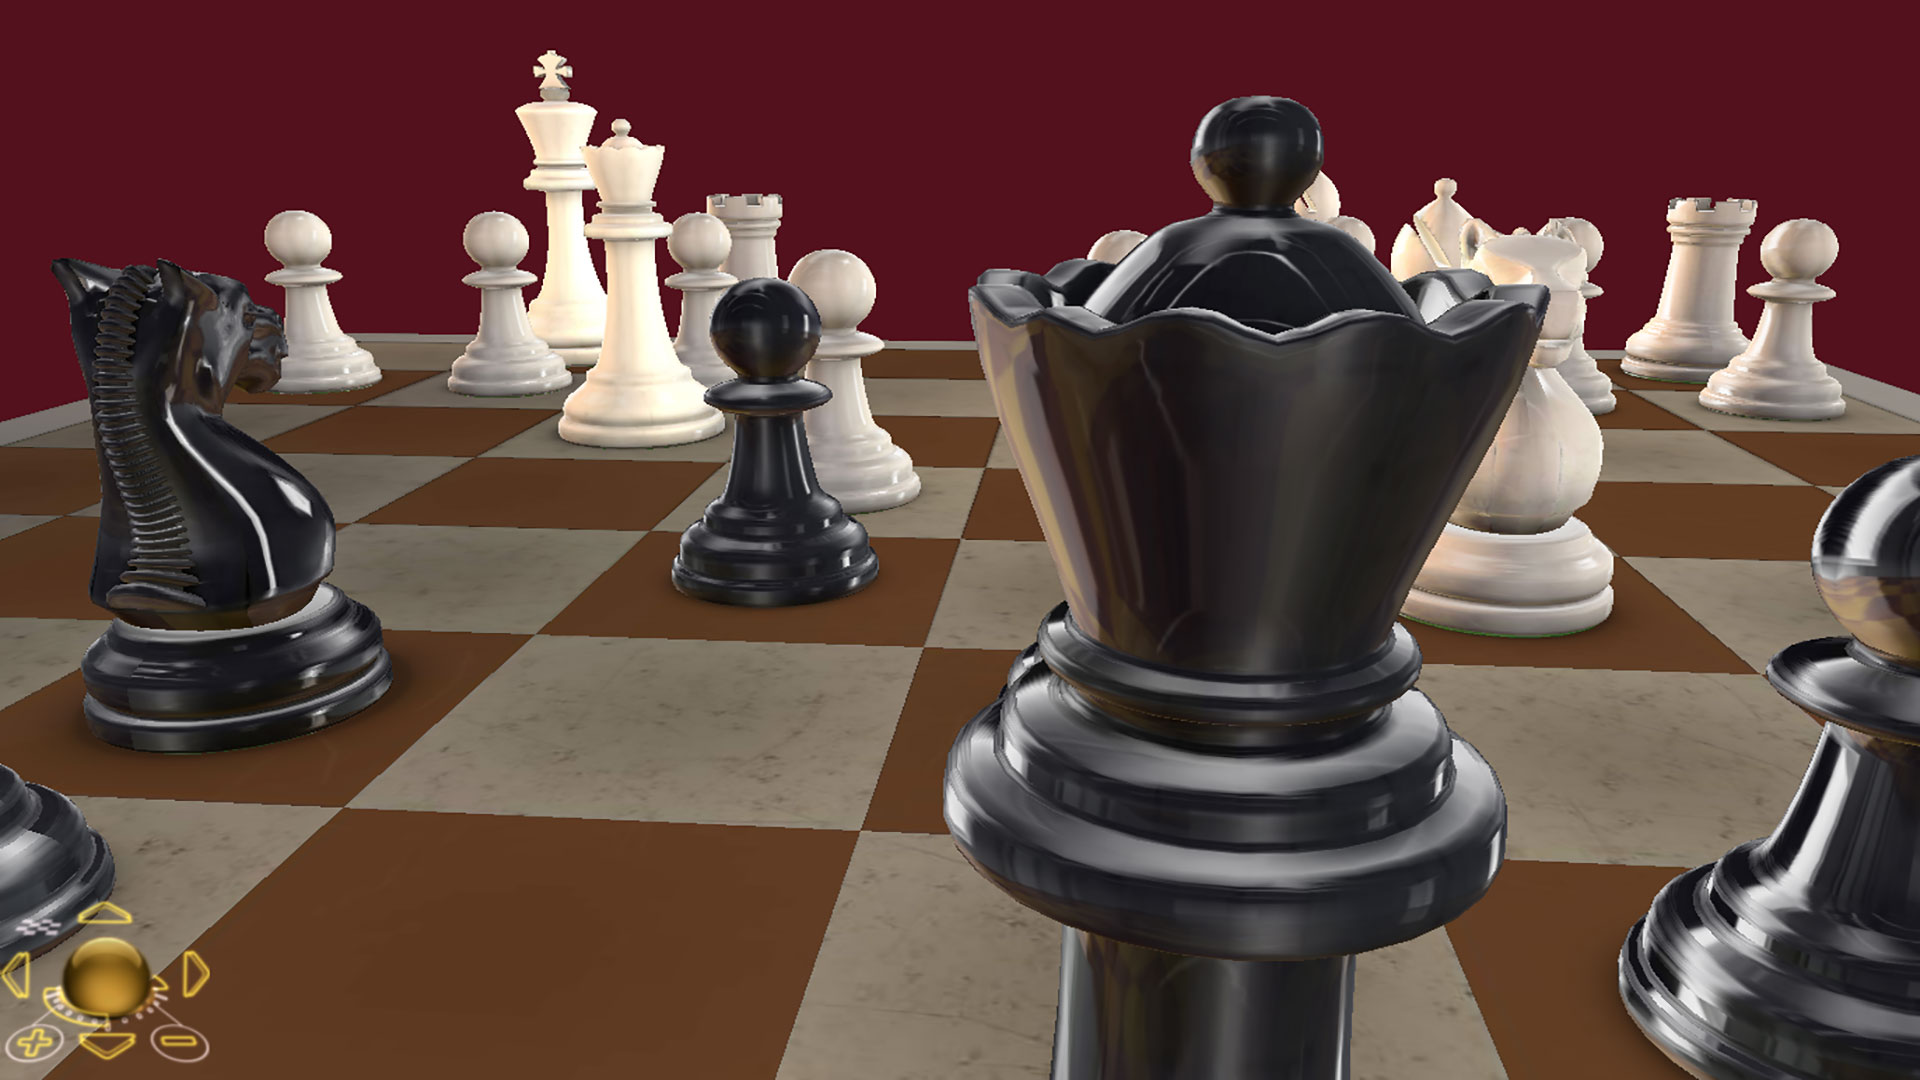 fritz chess app